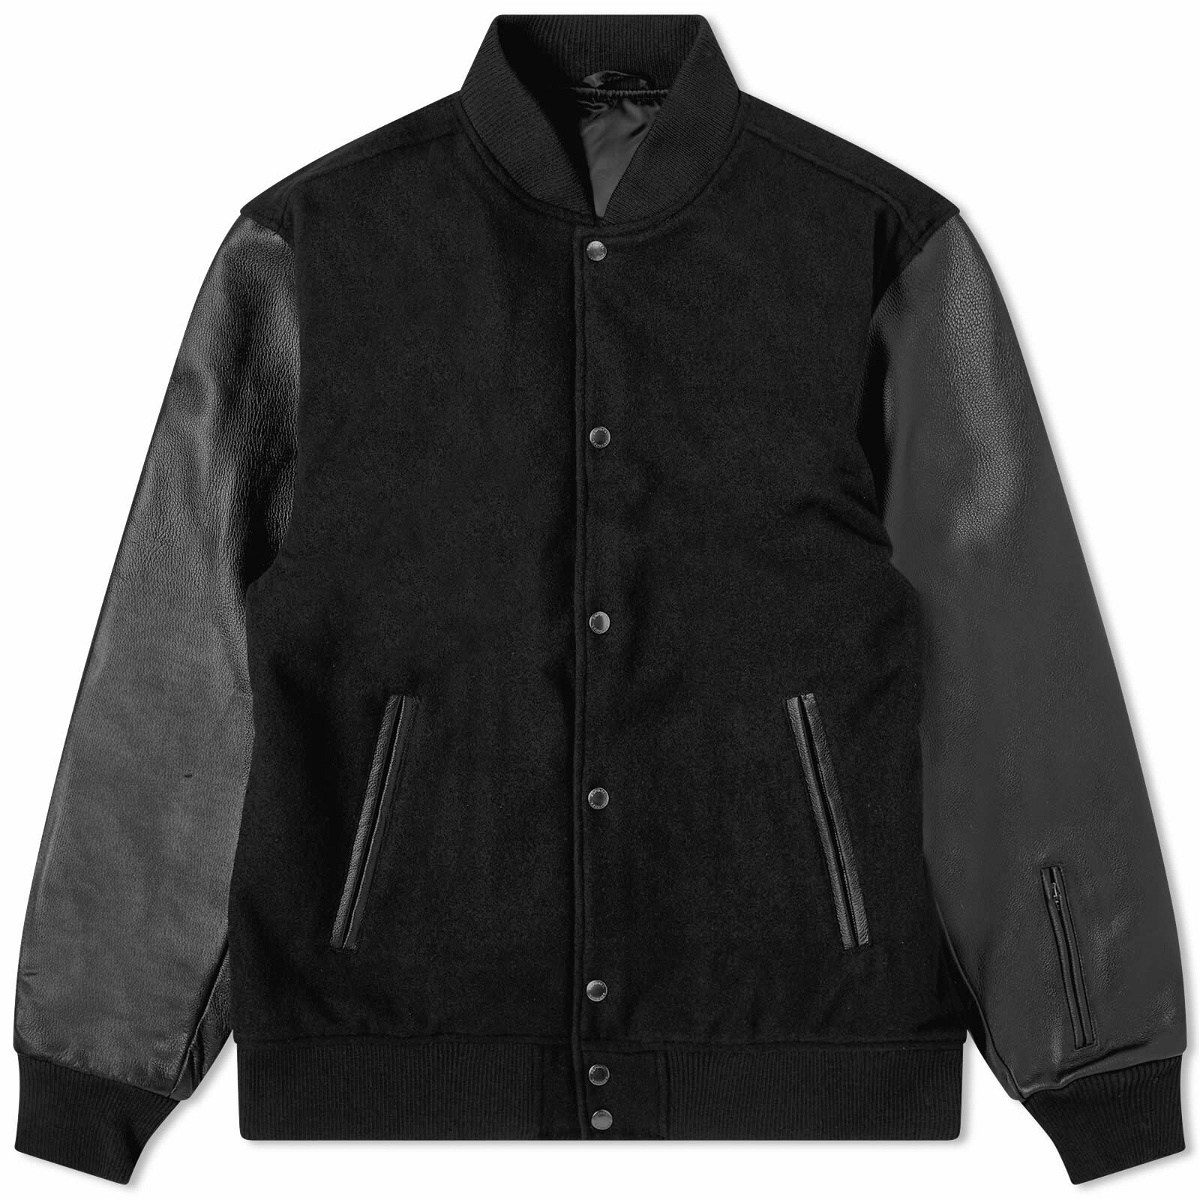 SOPHNET. Men's Leather Sleeve Varsity Jacket in Black SOPHNET.